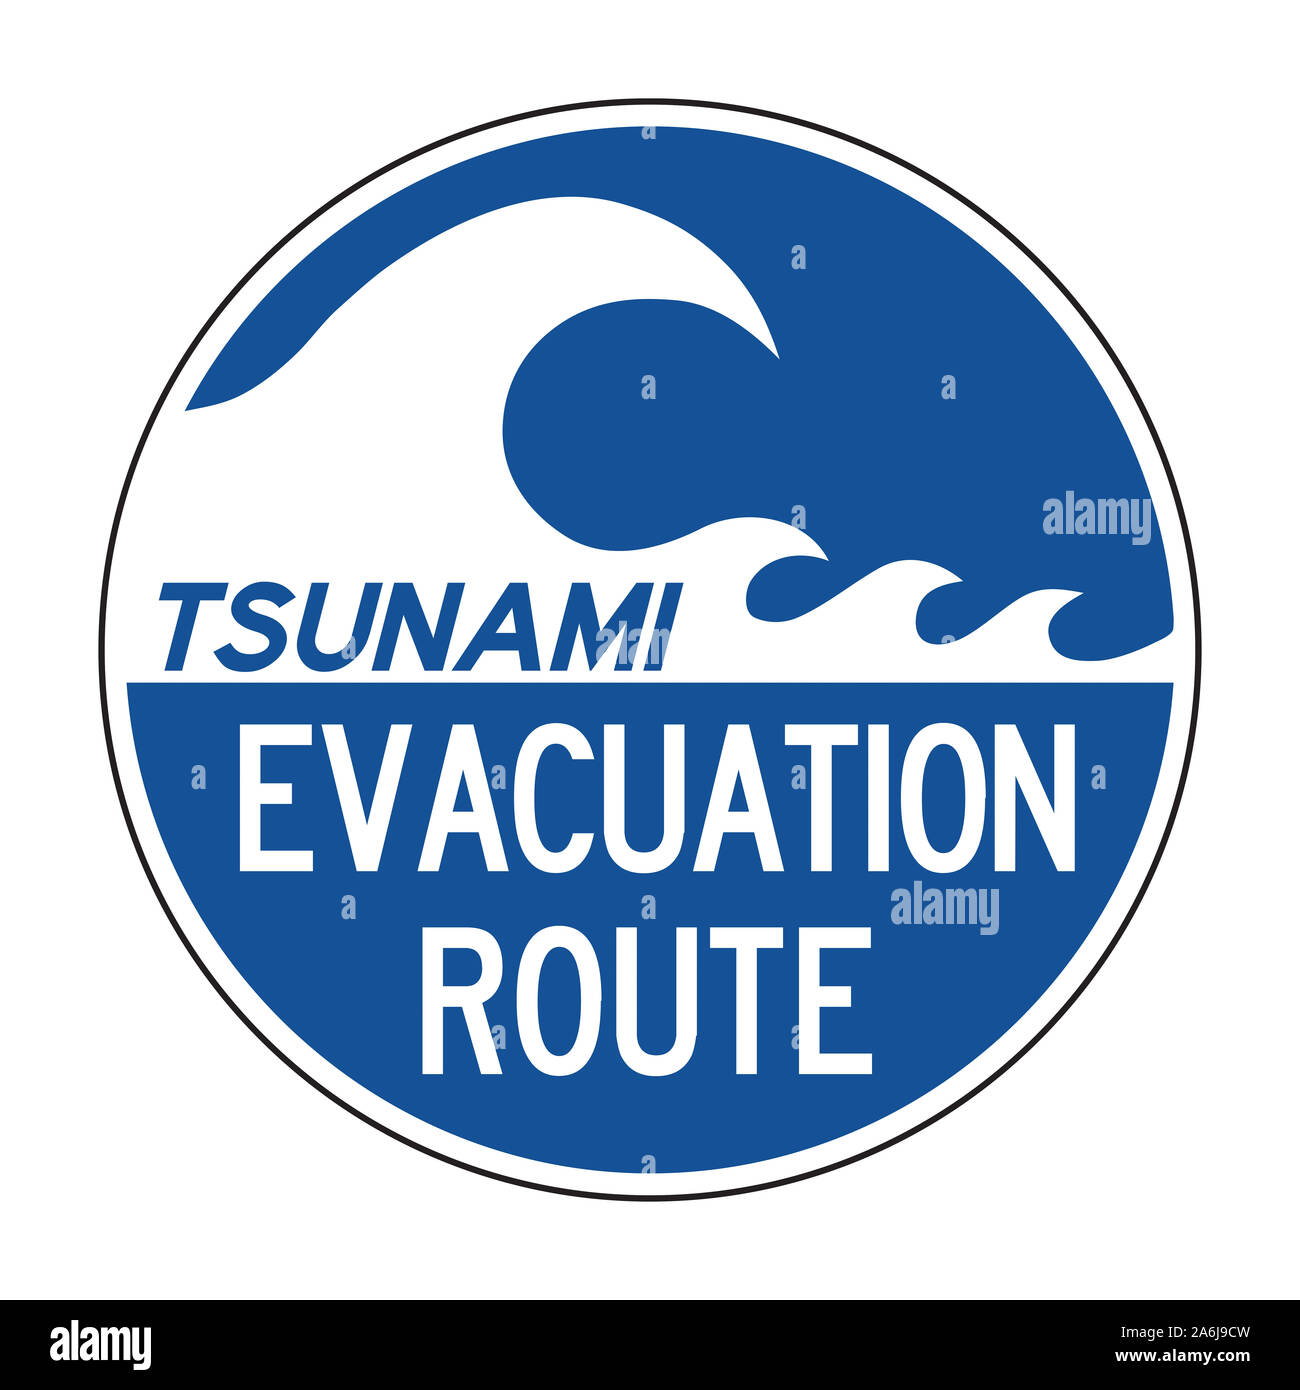 Tsunami evacuation route road sign Stock Photo